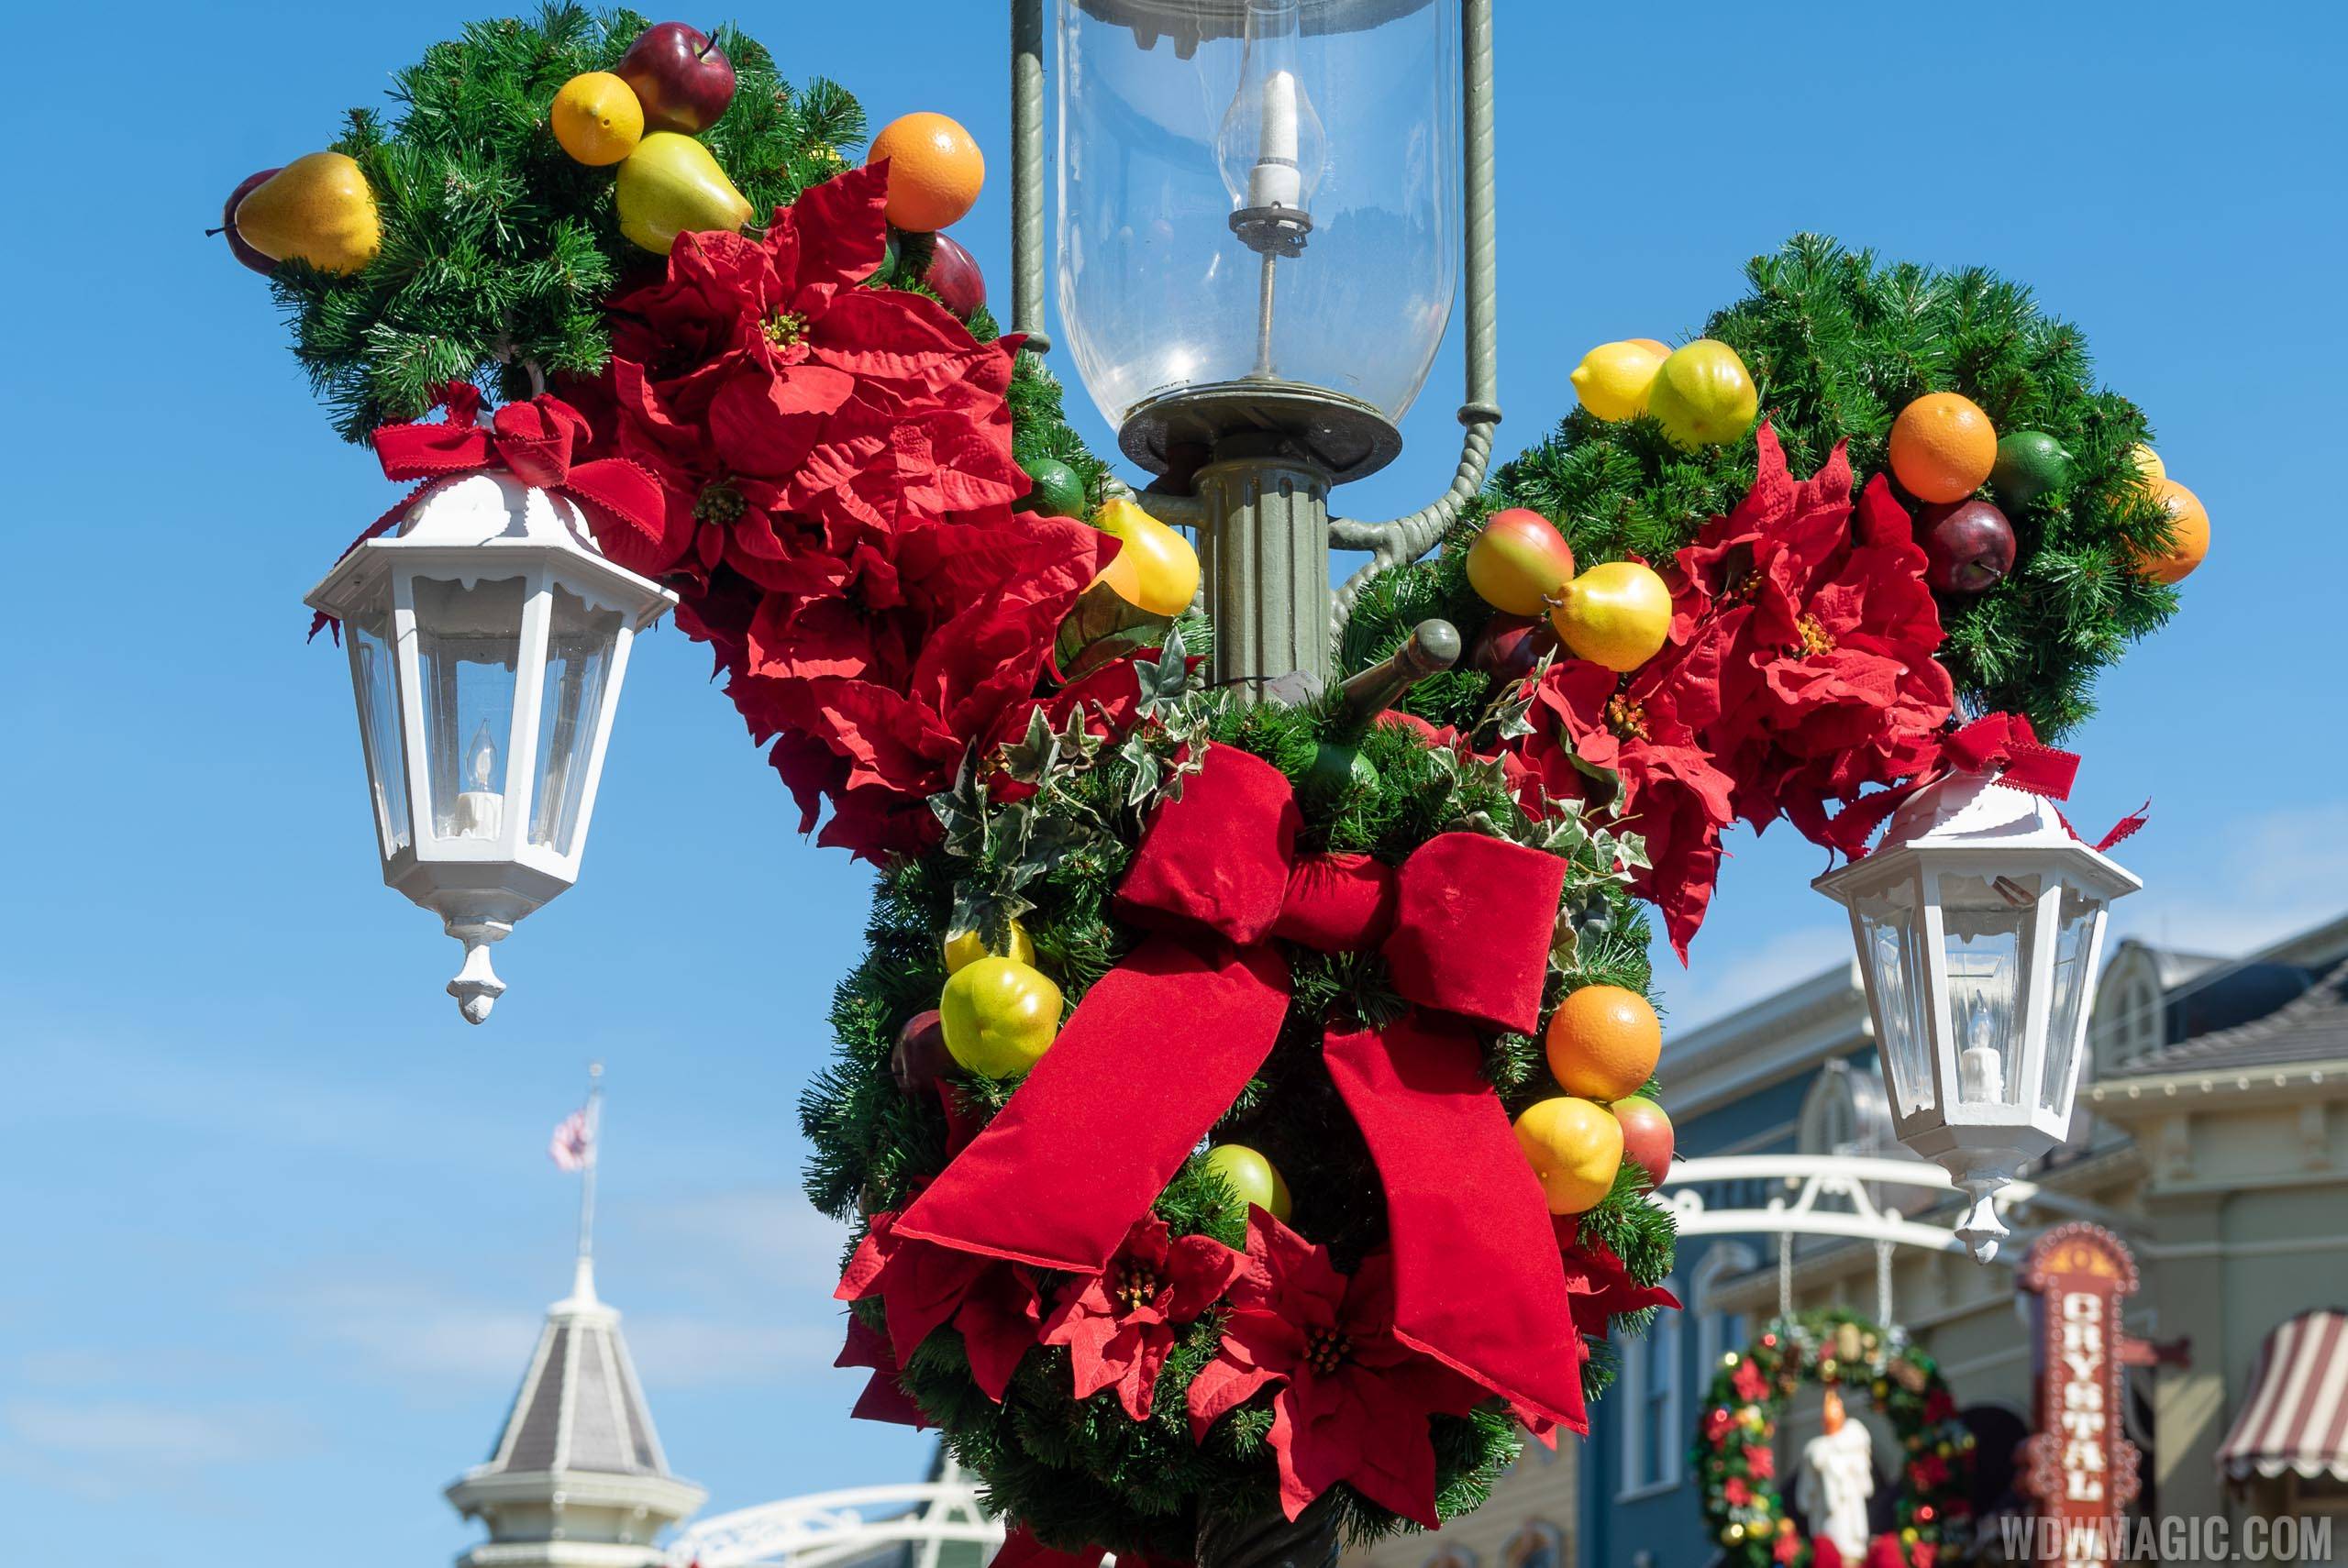 Christmas Holidays decorations at the Magic Kingdom 2019